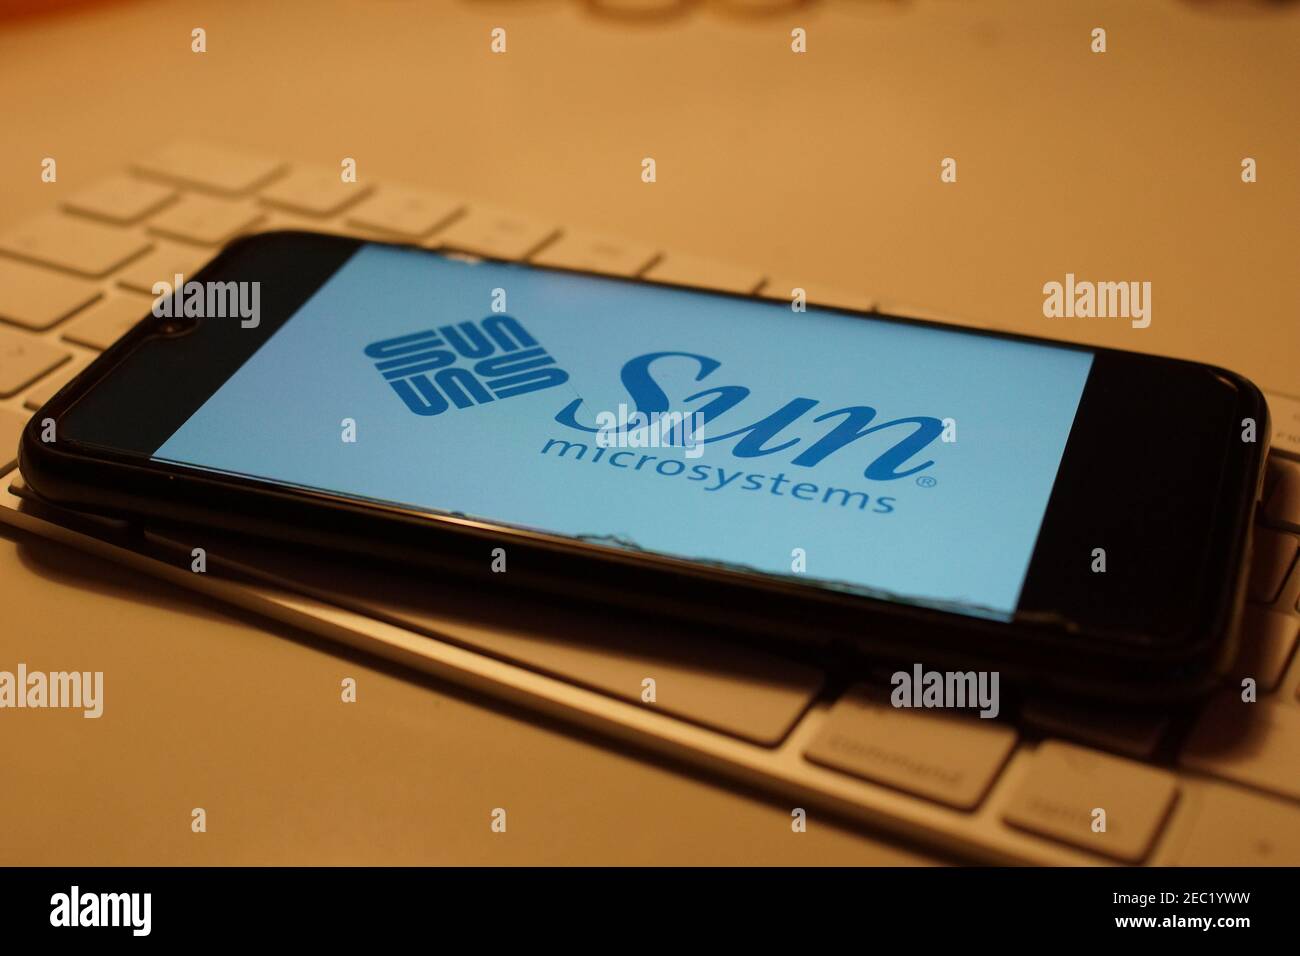 Smartphone with Sun logo on computer keyboard Stock Photo